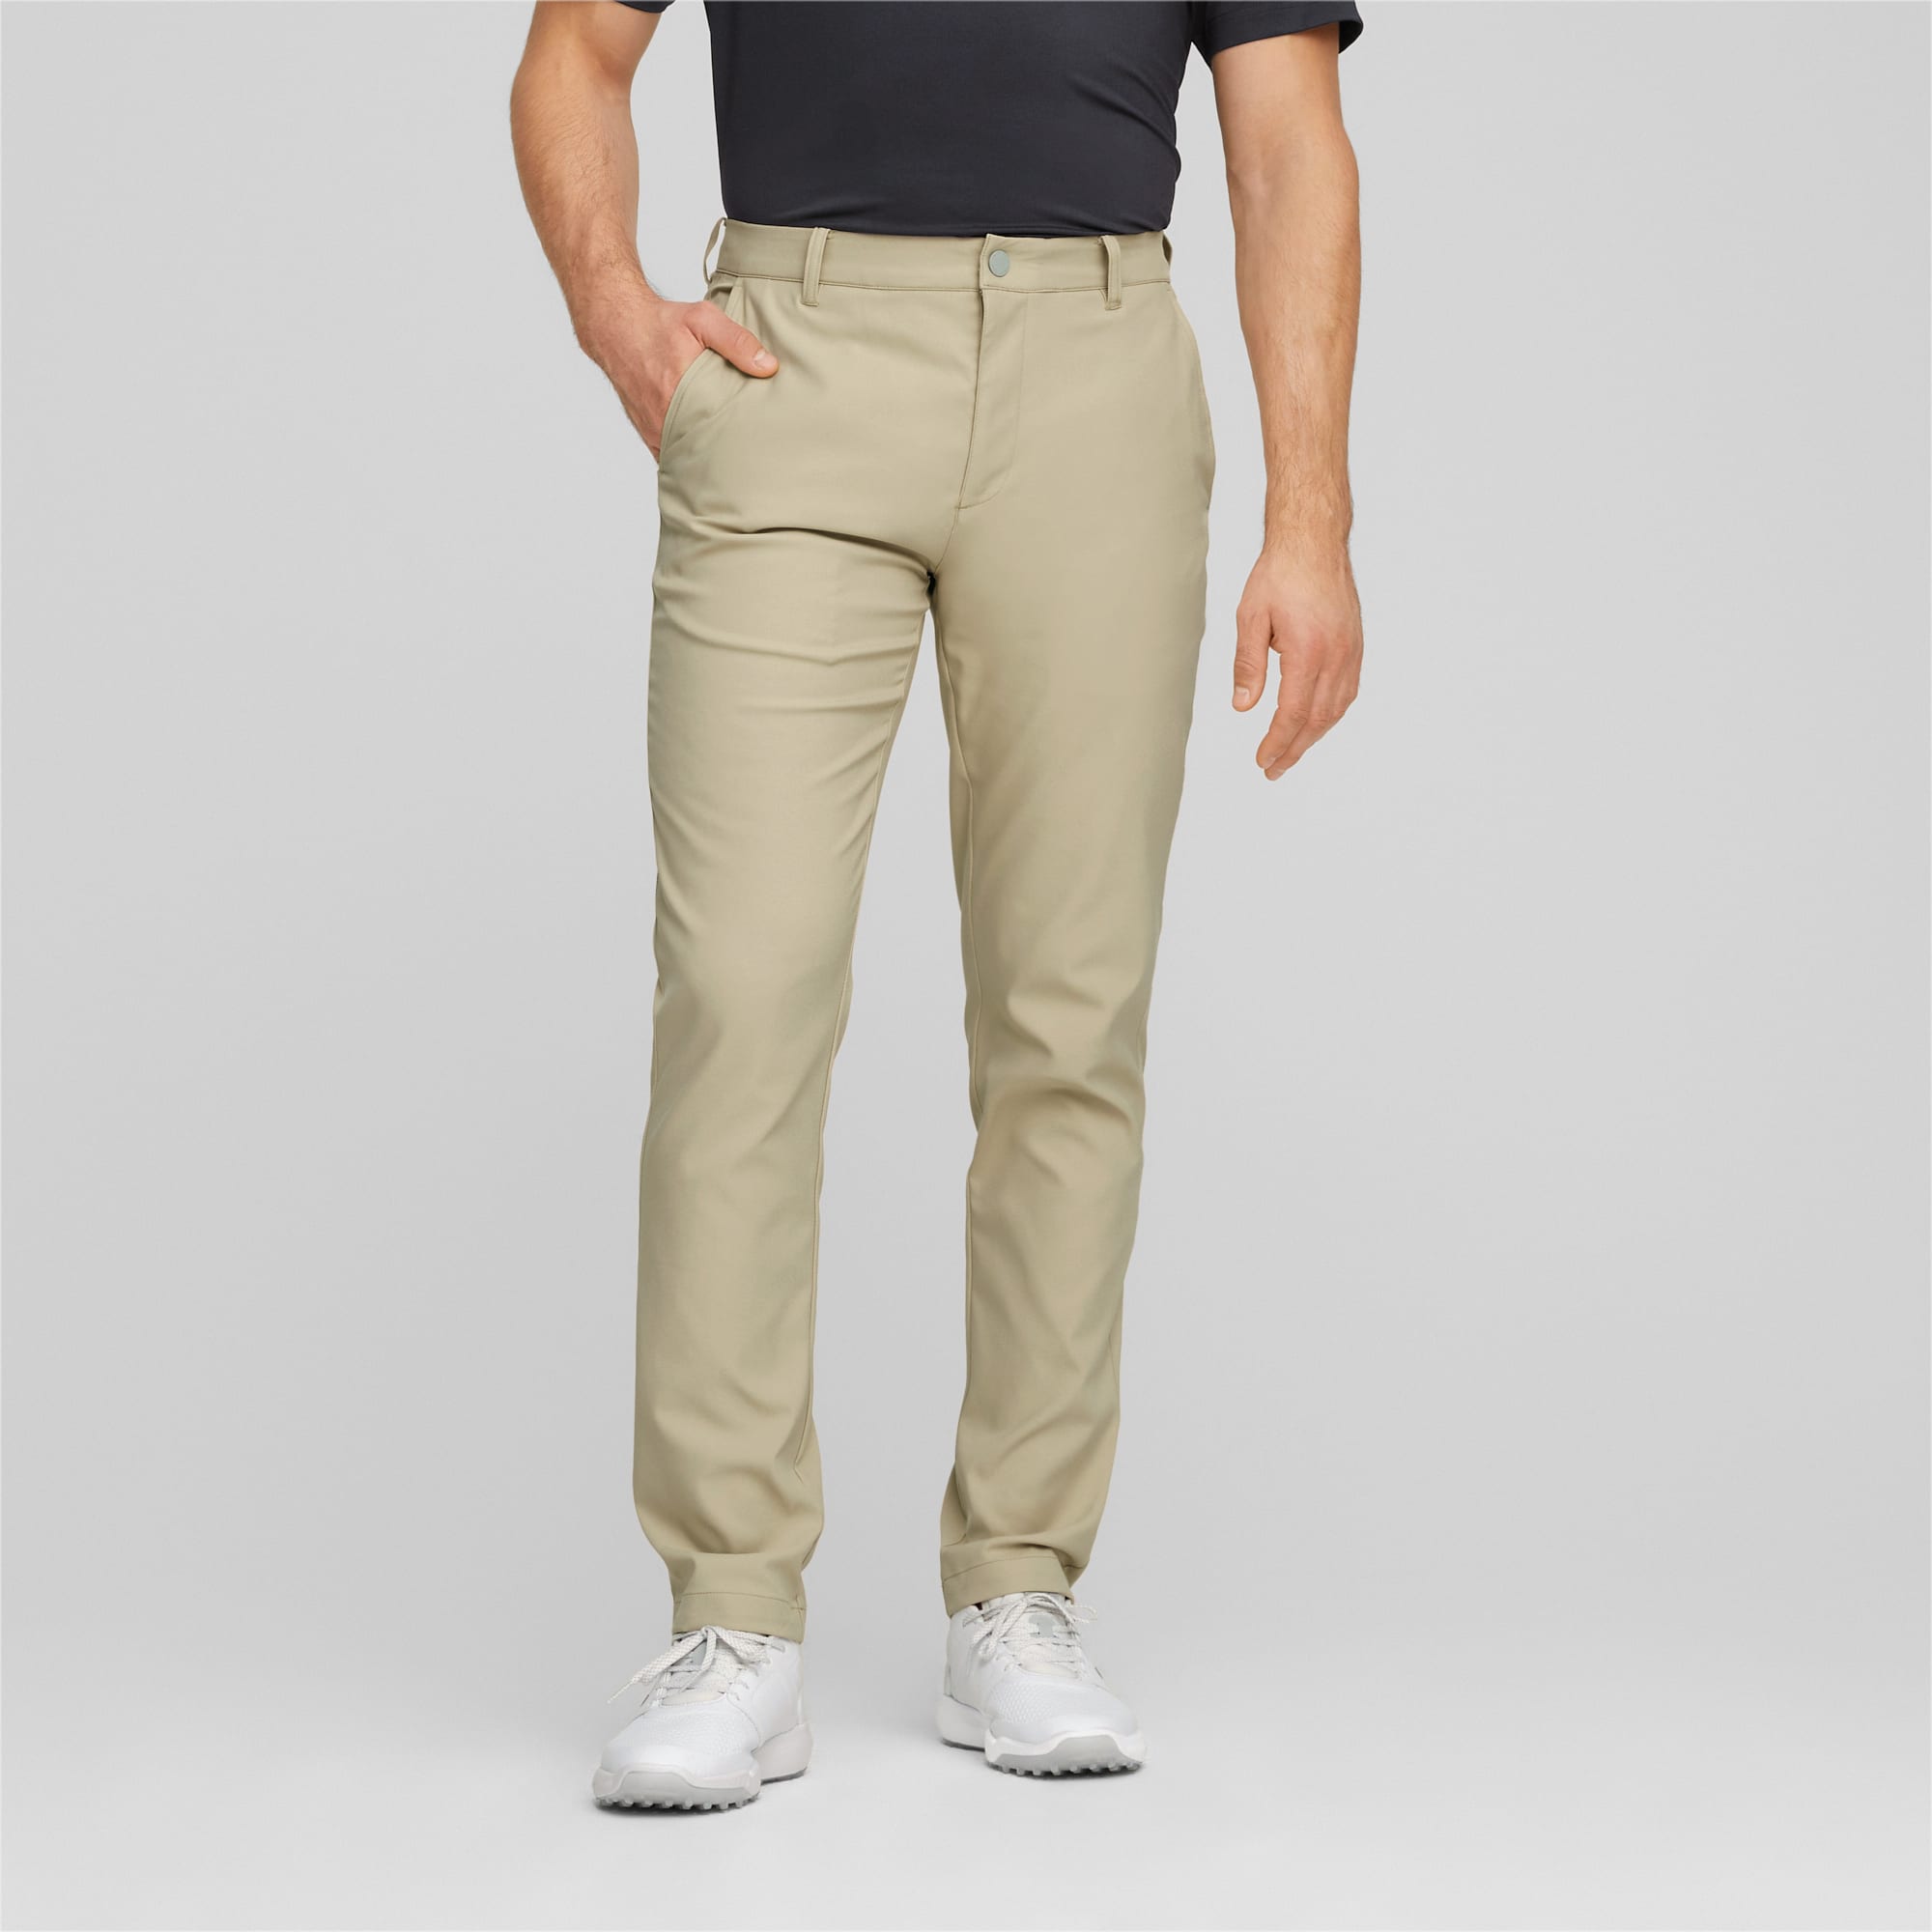 PUMA Dealer Tailored Golf Pants Men, Alabaster, Size 38/30, Clothing